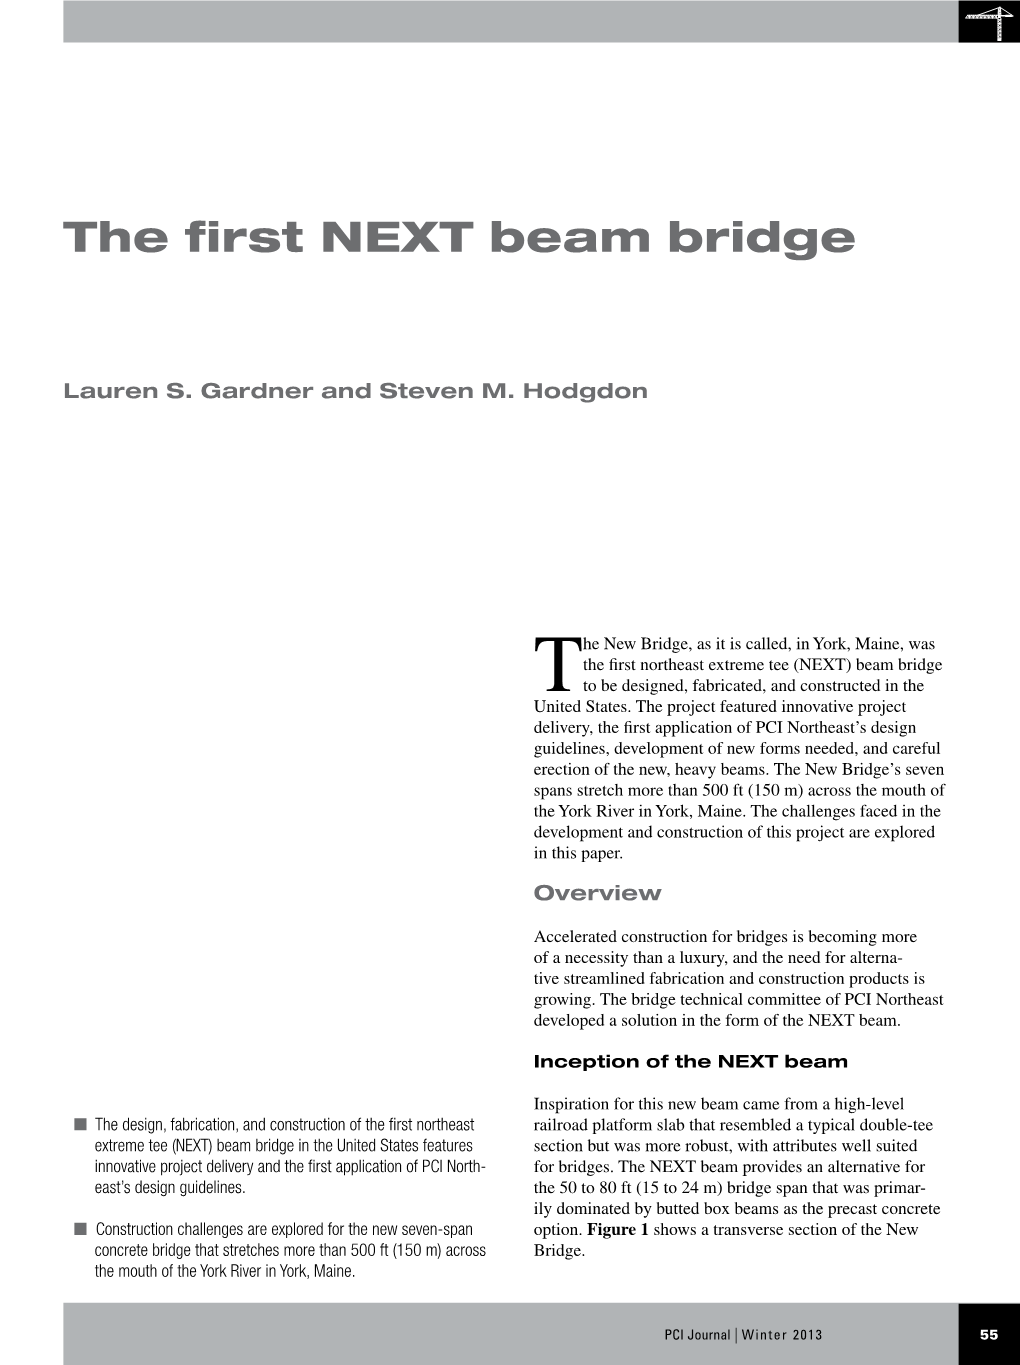 The First NEXT Beam Bridge